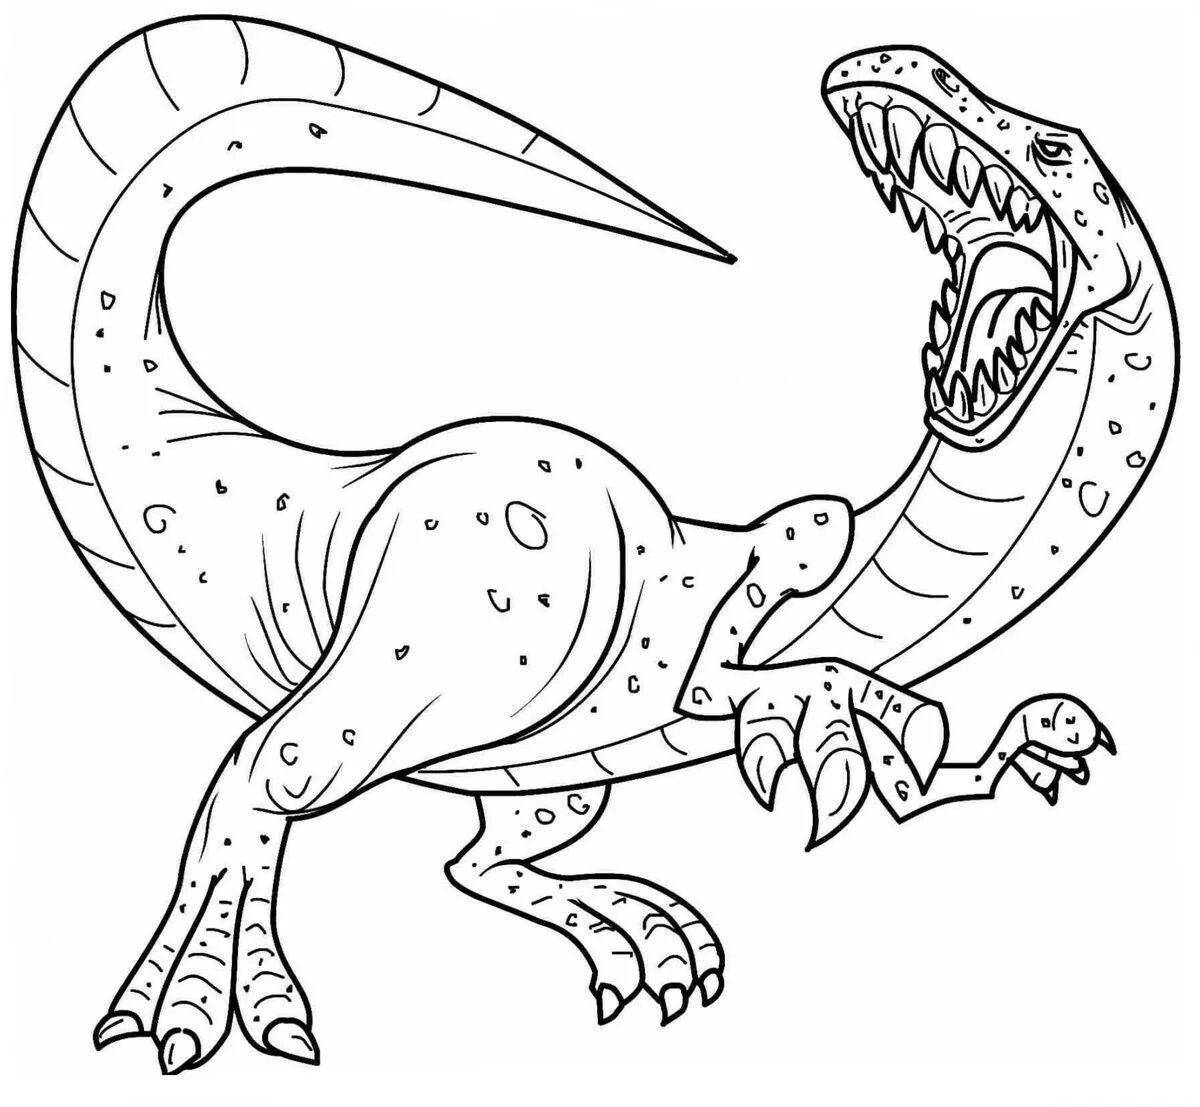 Dinosaur drawings for #4